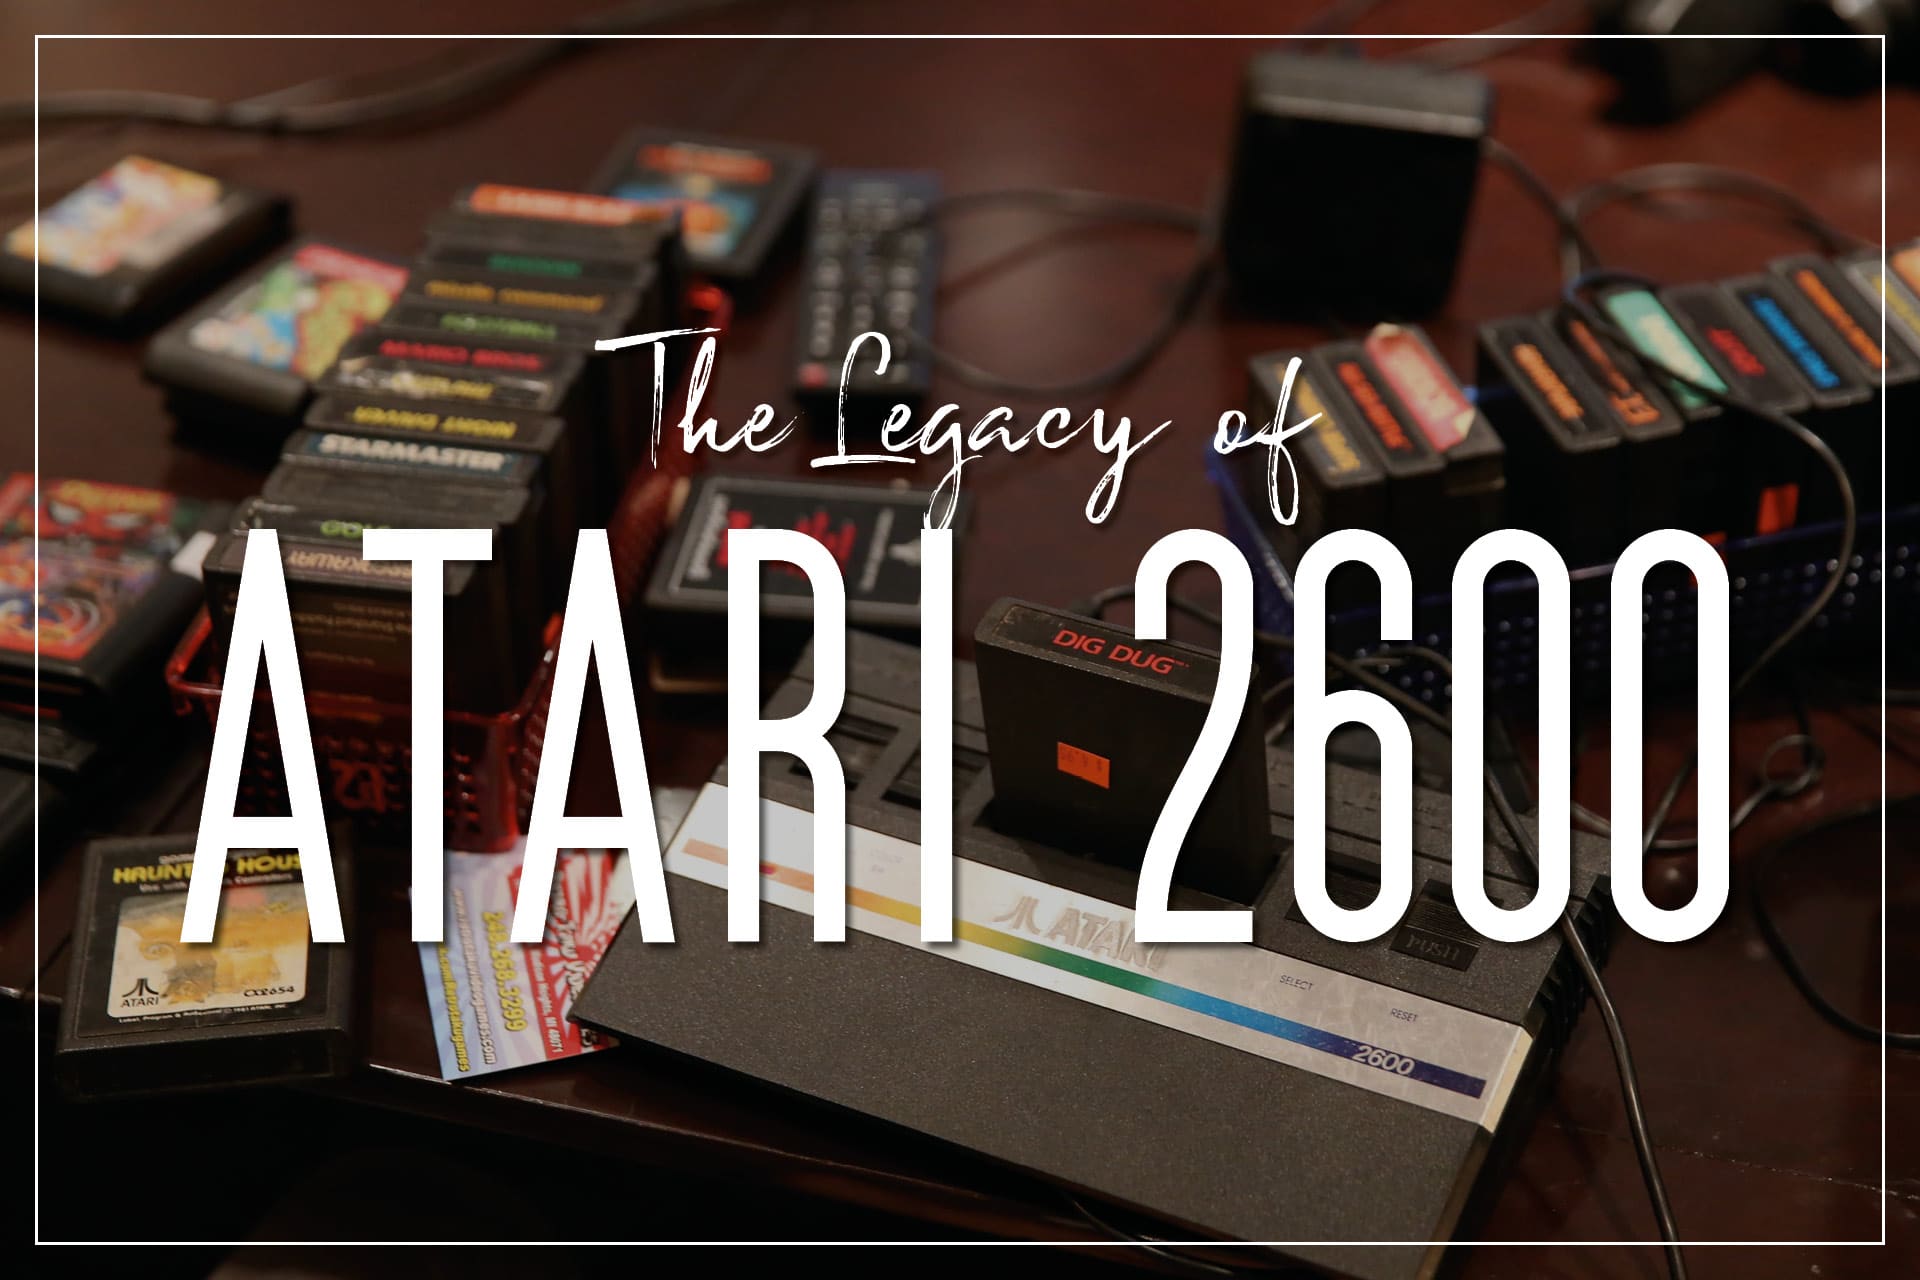 The Legacy of the Atari 2600